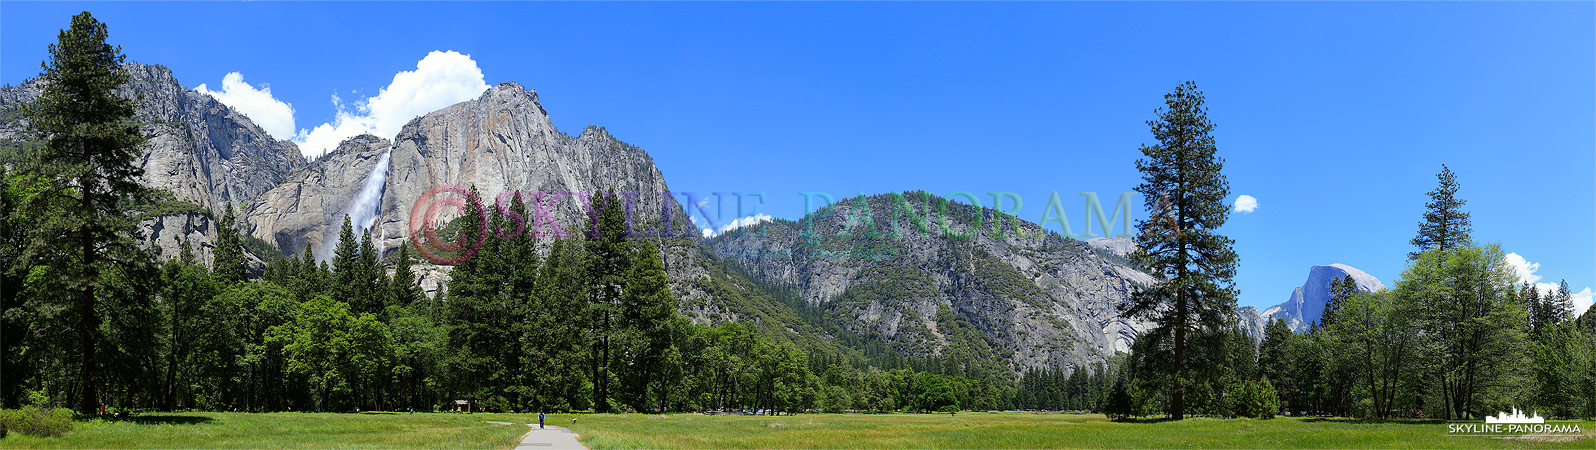 Yosemite Nationalpark – Wasserfall Half Dome (p_00554)